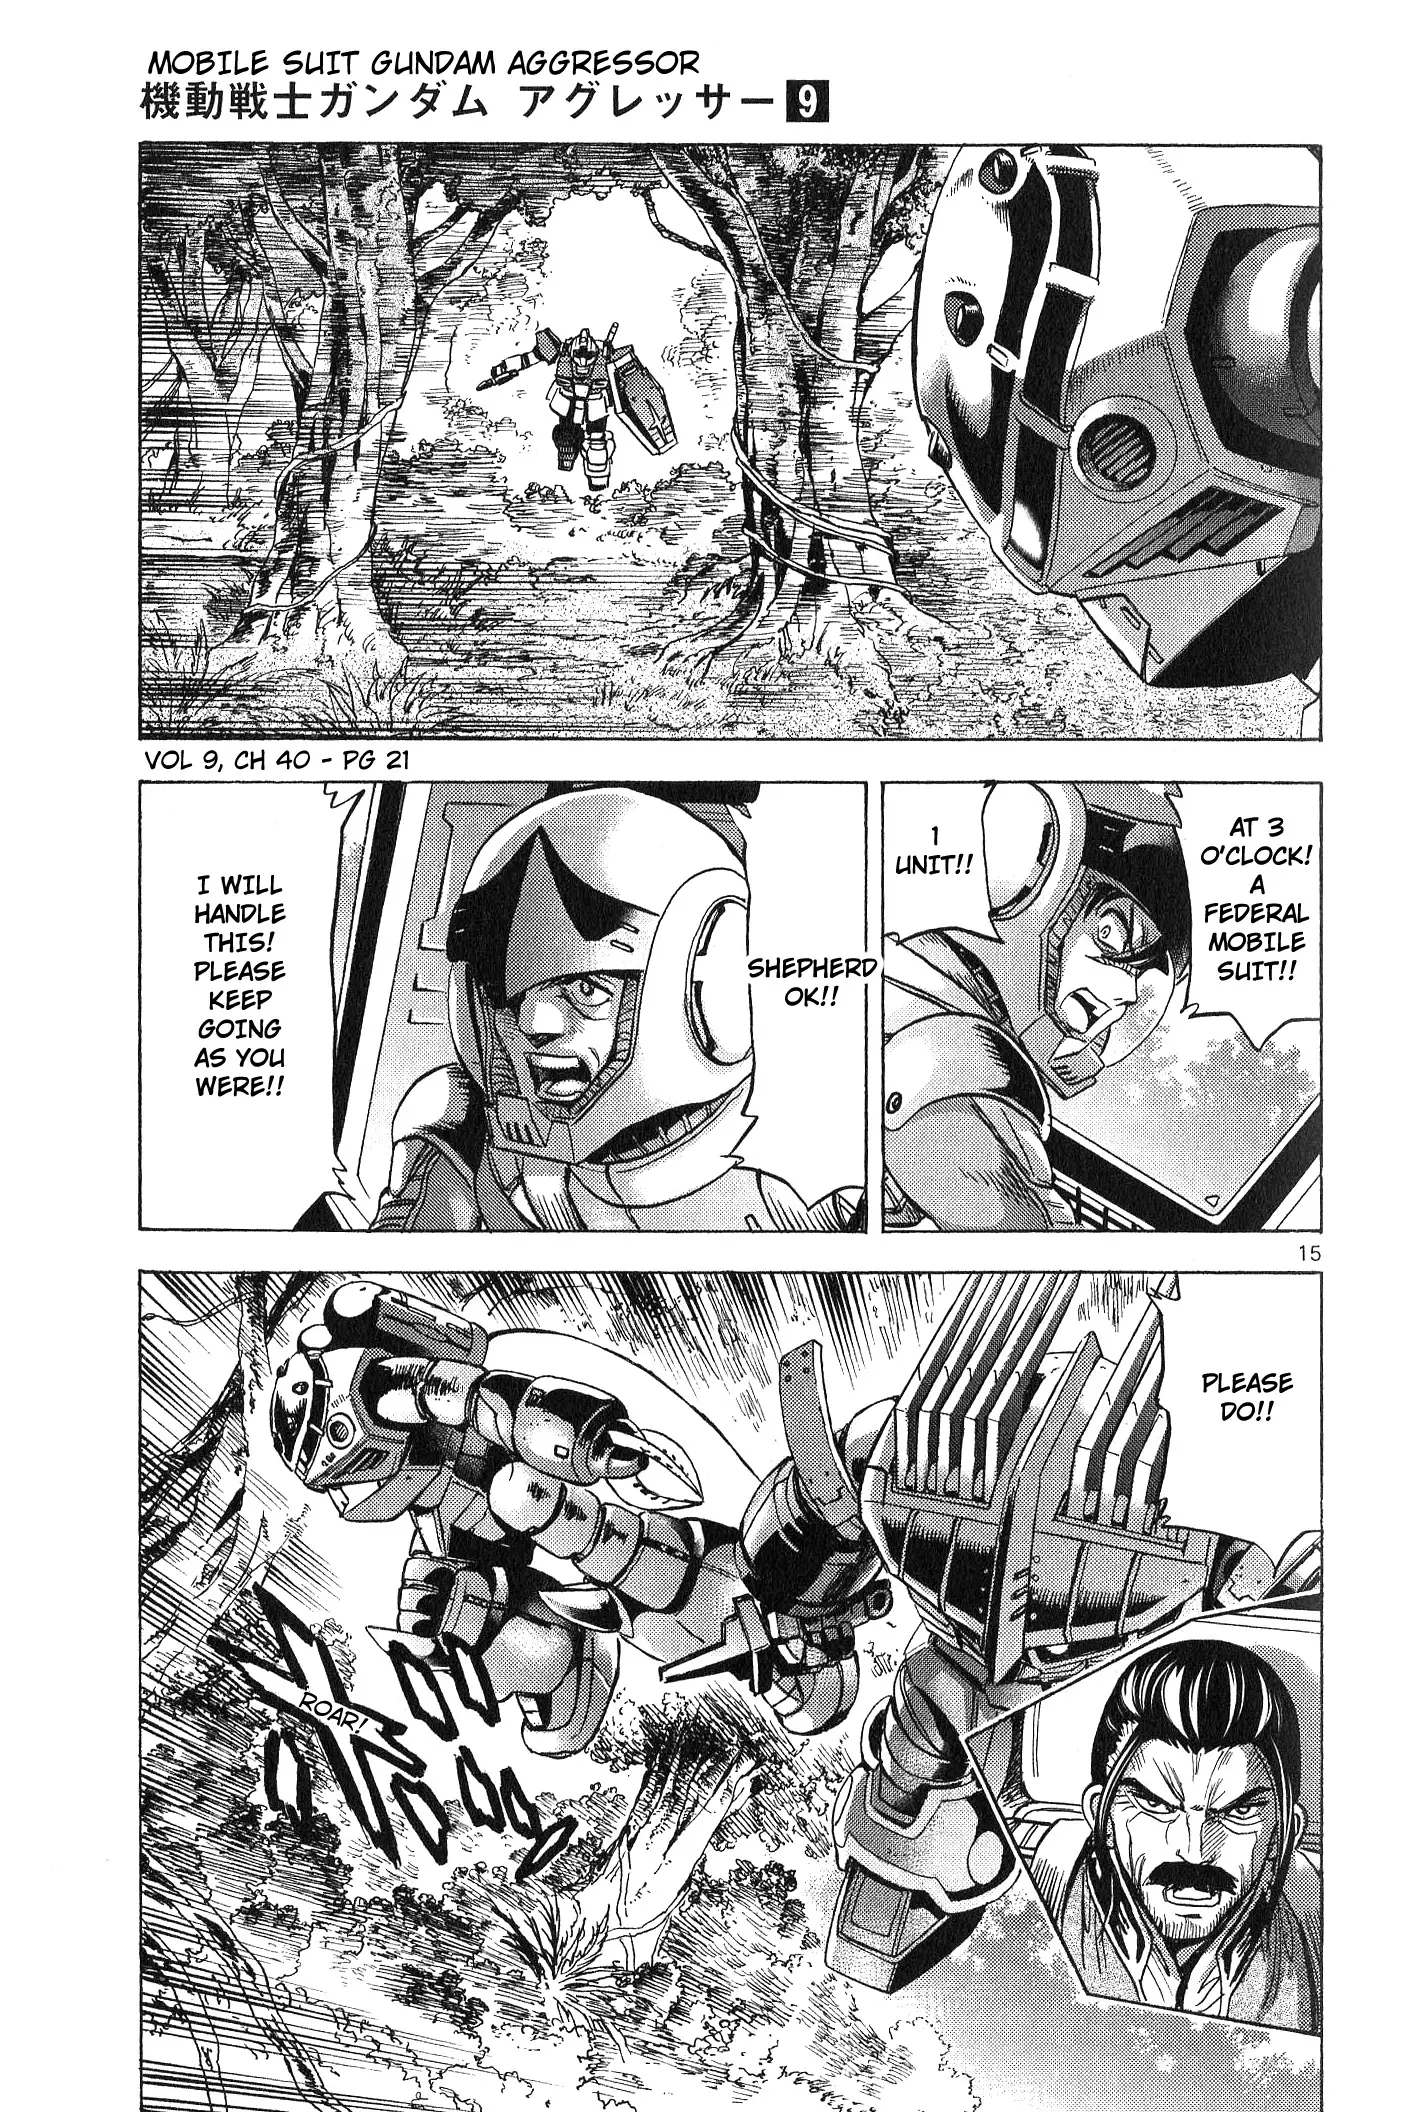 Mobile Suit Gundam Aggressor - 40 page 14-ffc35930